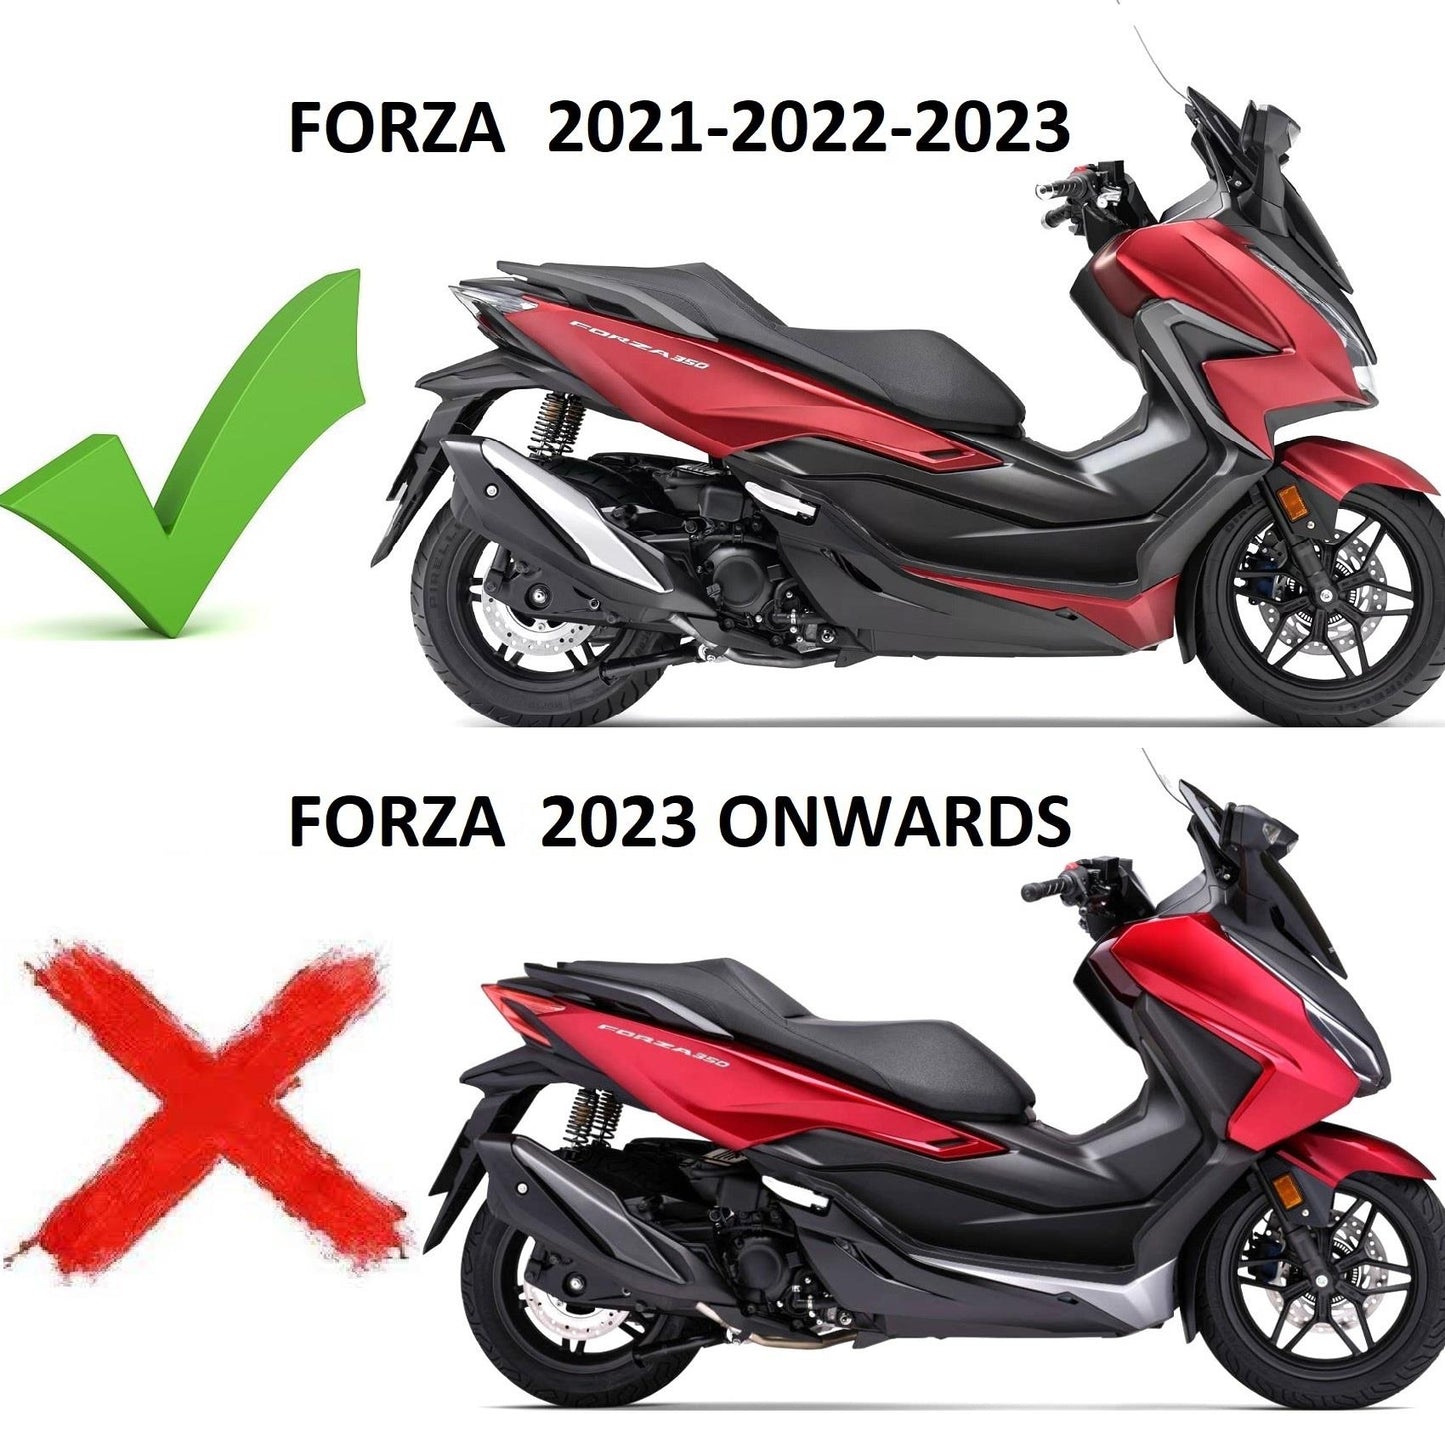 Honda Forza125 rear rack Forza 125 rear carrier 2021-2022-2023 ONLY